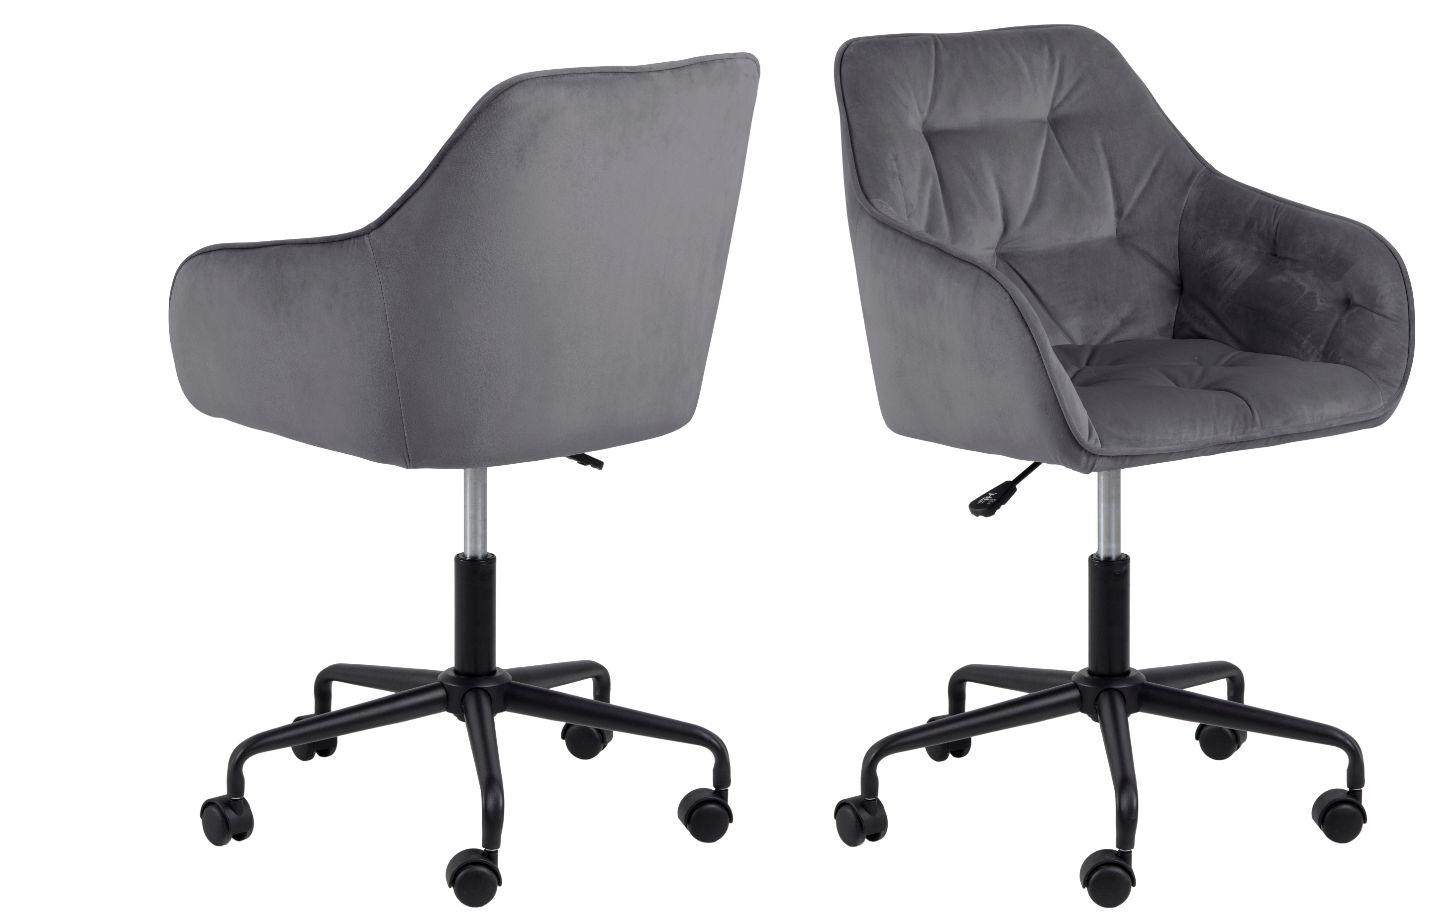 Kancelářská Židle Brooke B: Tmavěšedá, Samet - černá/tmavě šedá, Design, kov/textil (59/88,5/58,5cm)